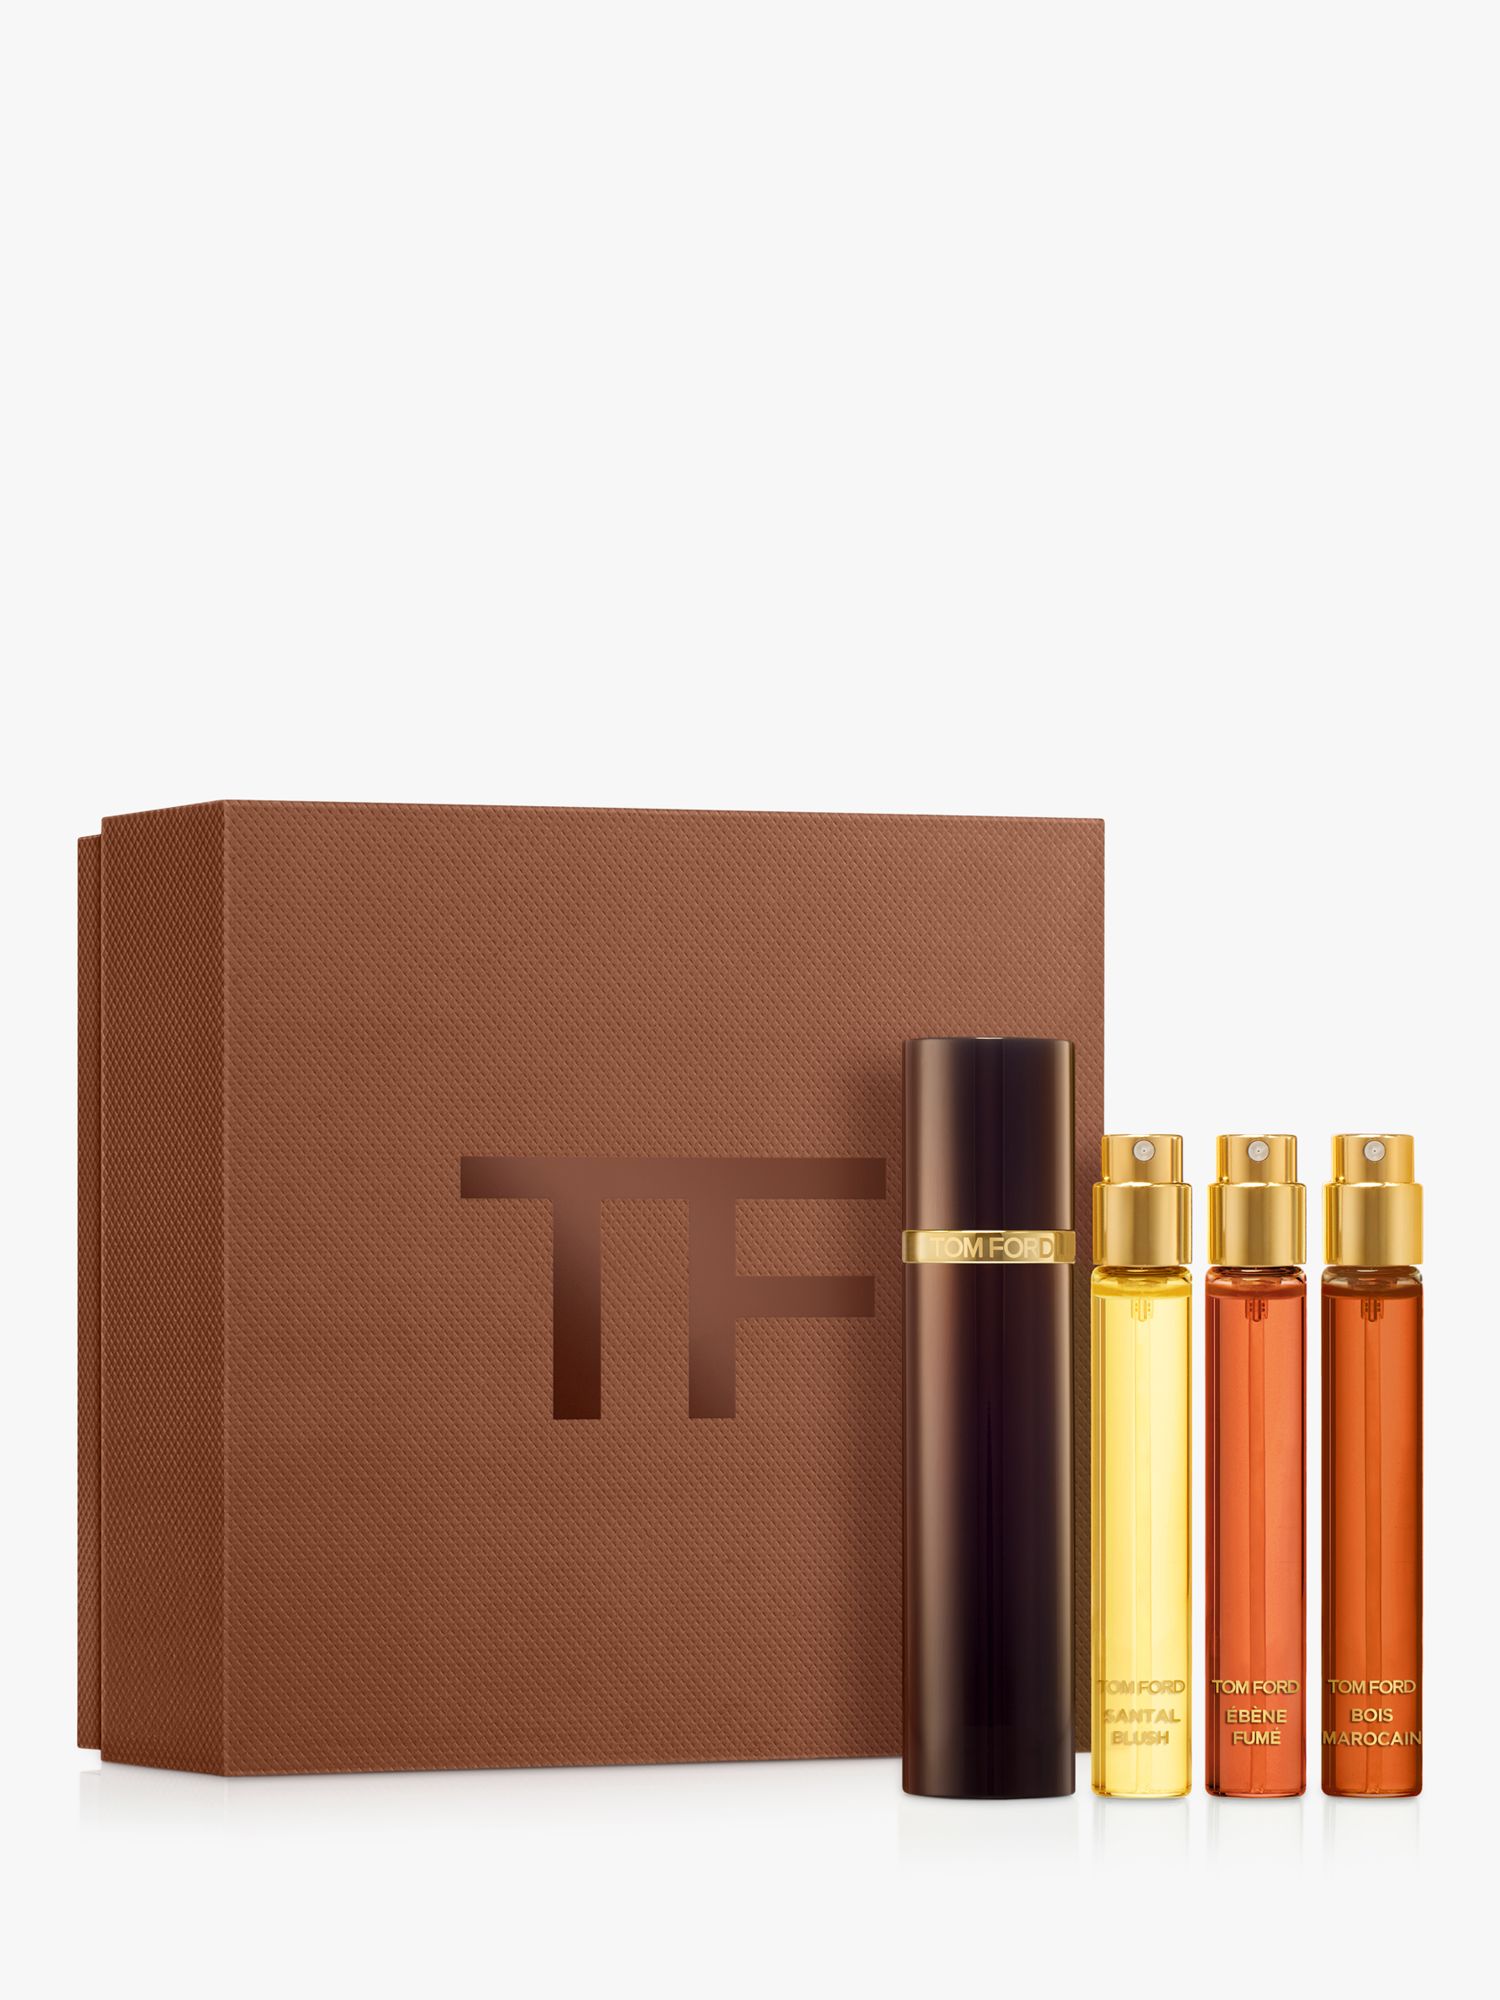 TOM FORD Woods Trilogy Fragrance Gift Set, 3 x 10ml